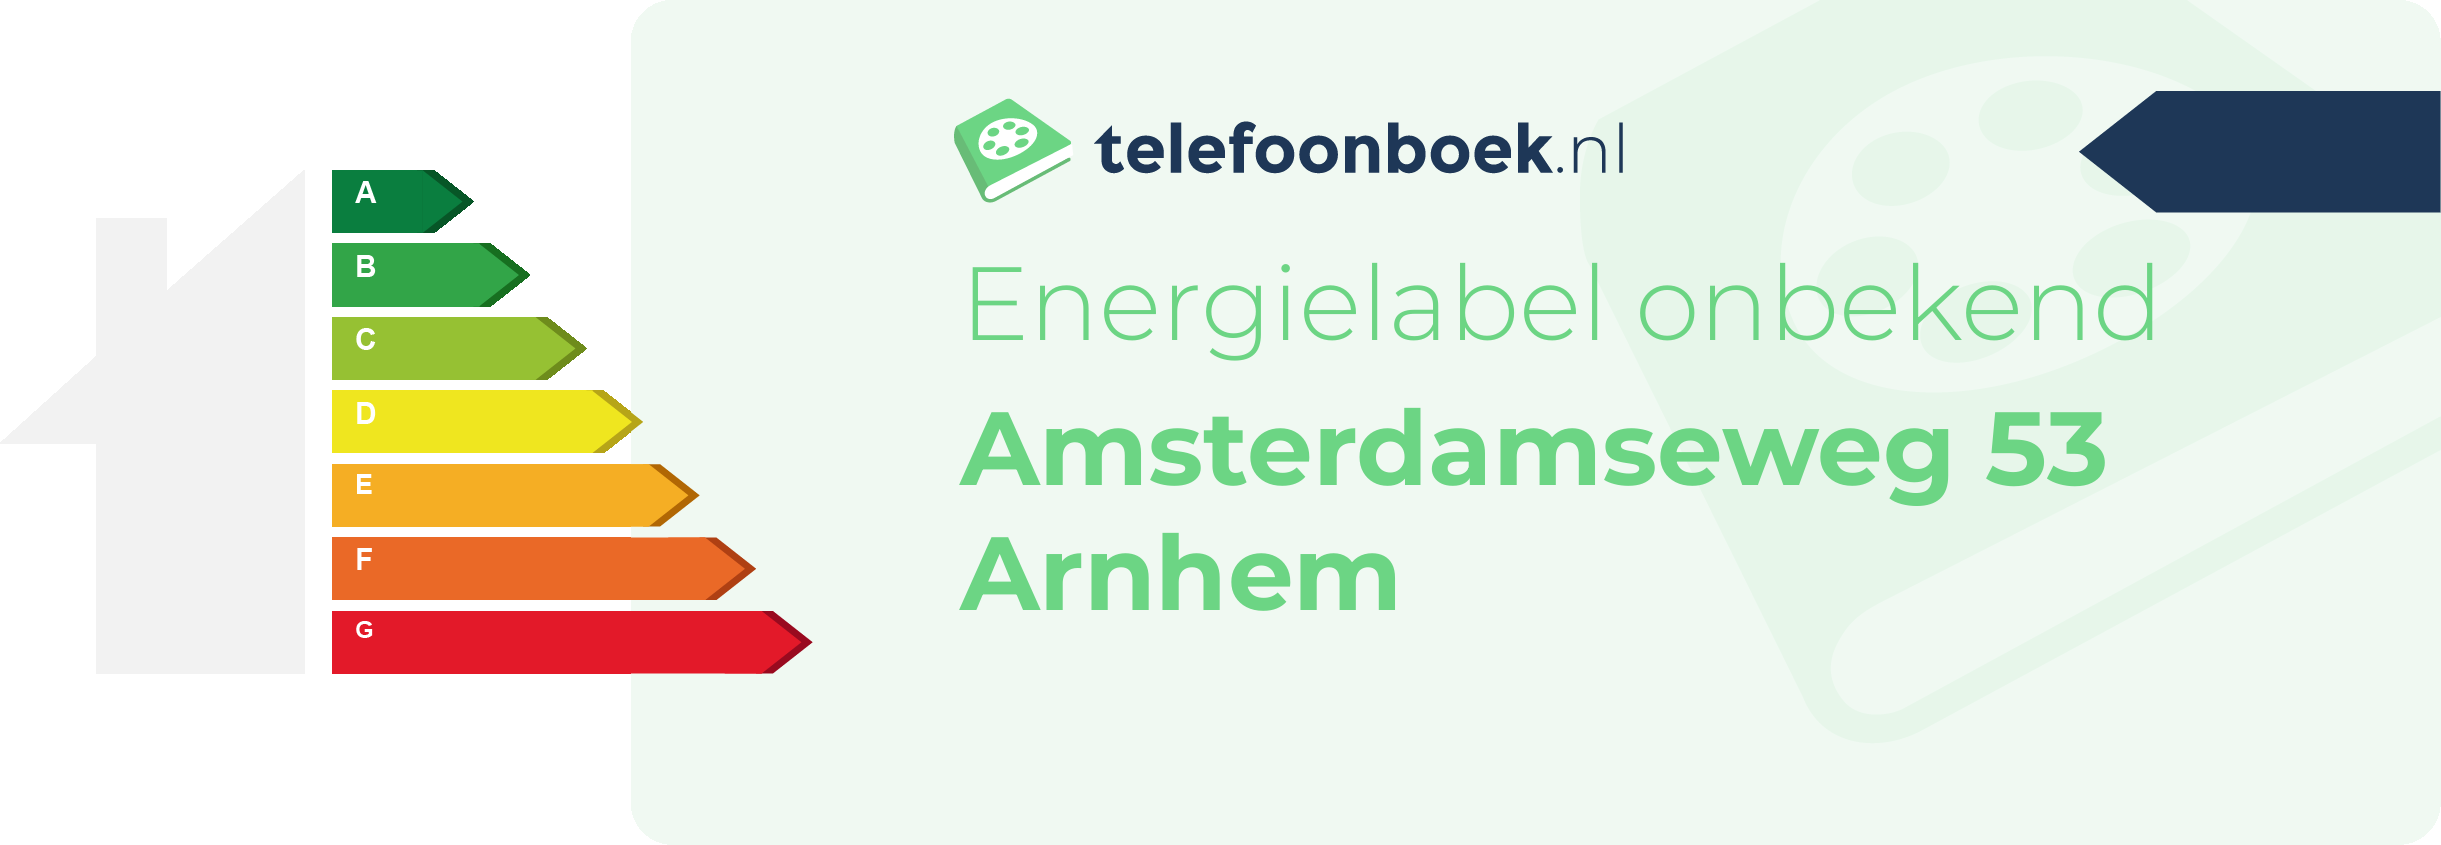 Energielabel Amsterdamseweg 53 Arnhem